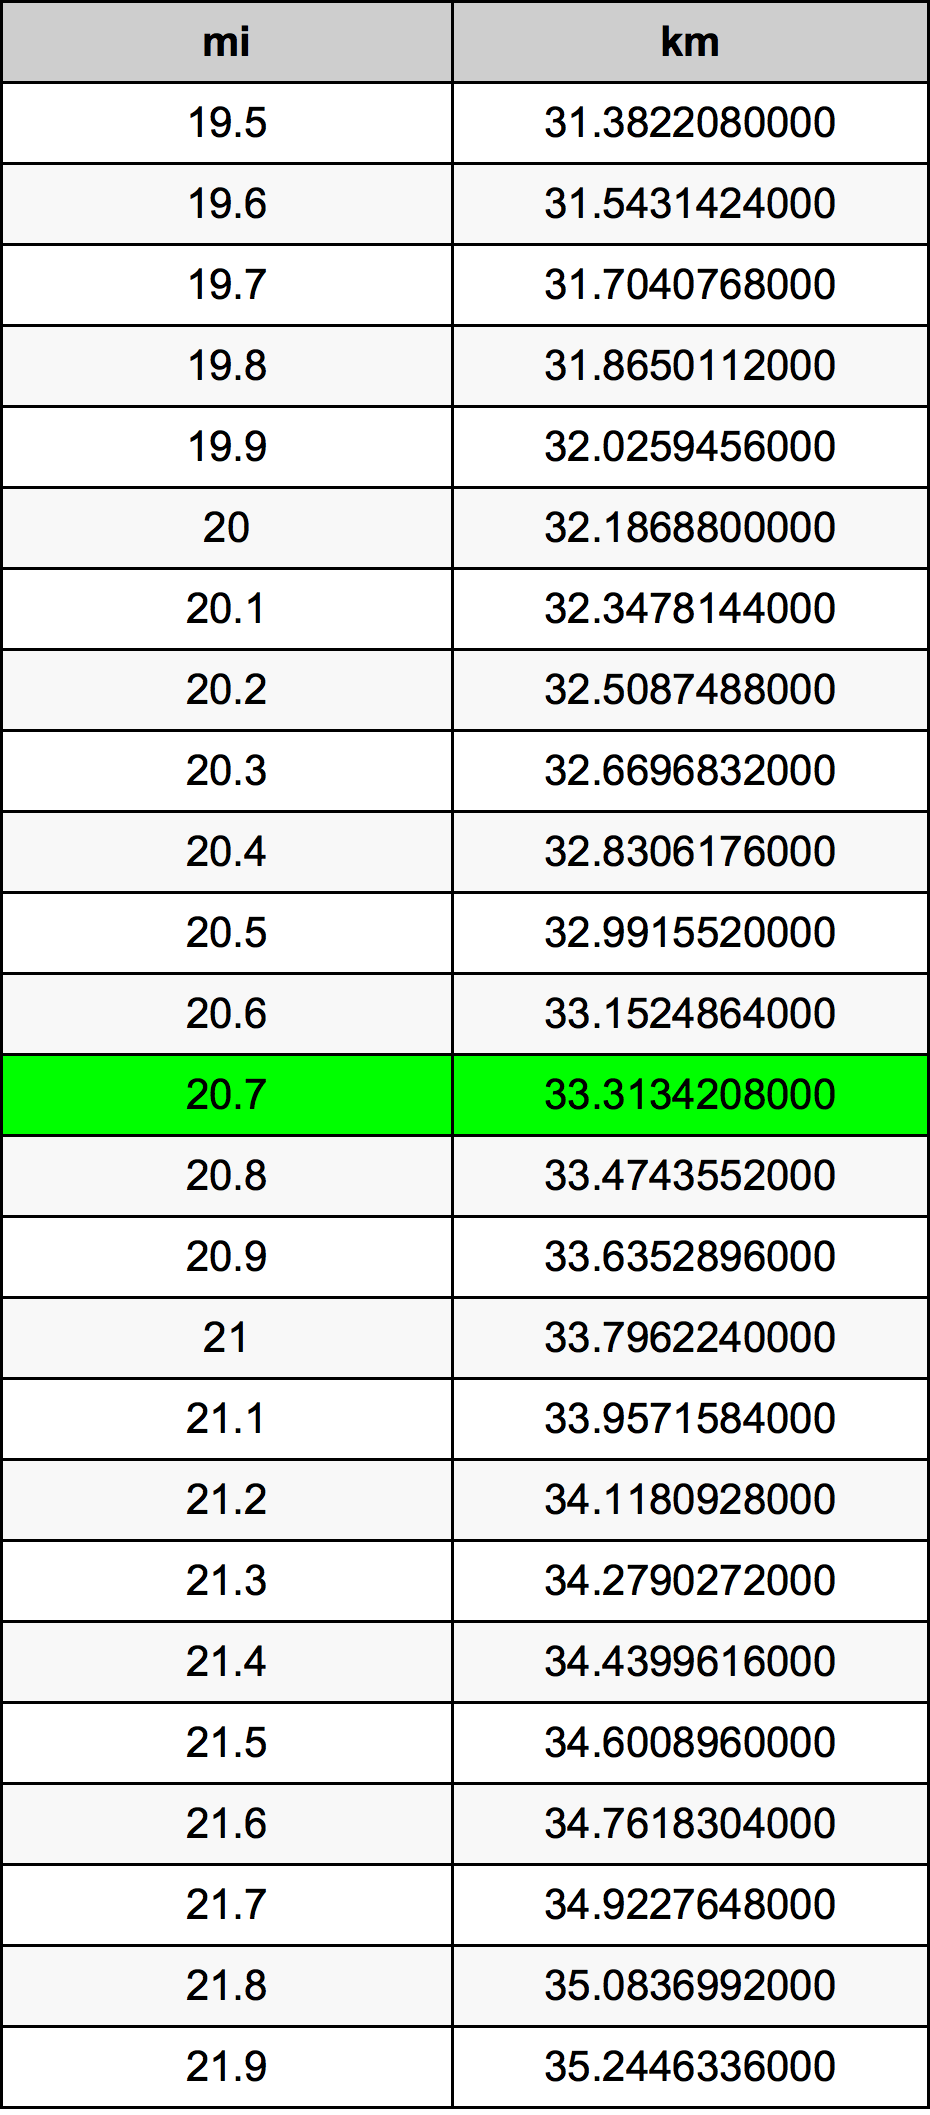 20.7 mil konversi tabel